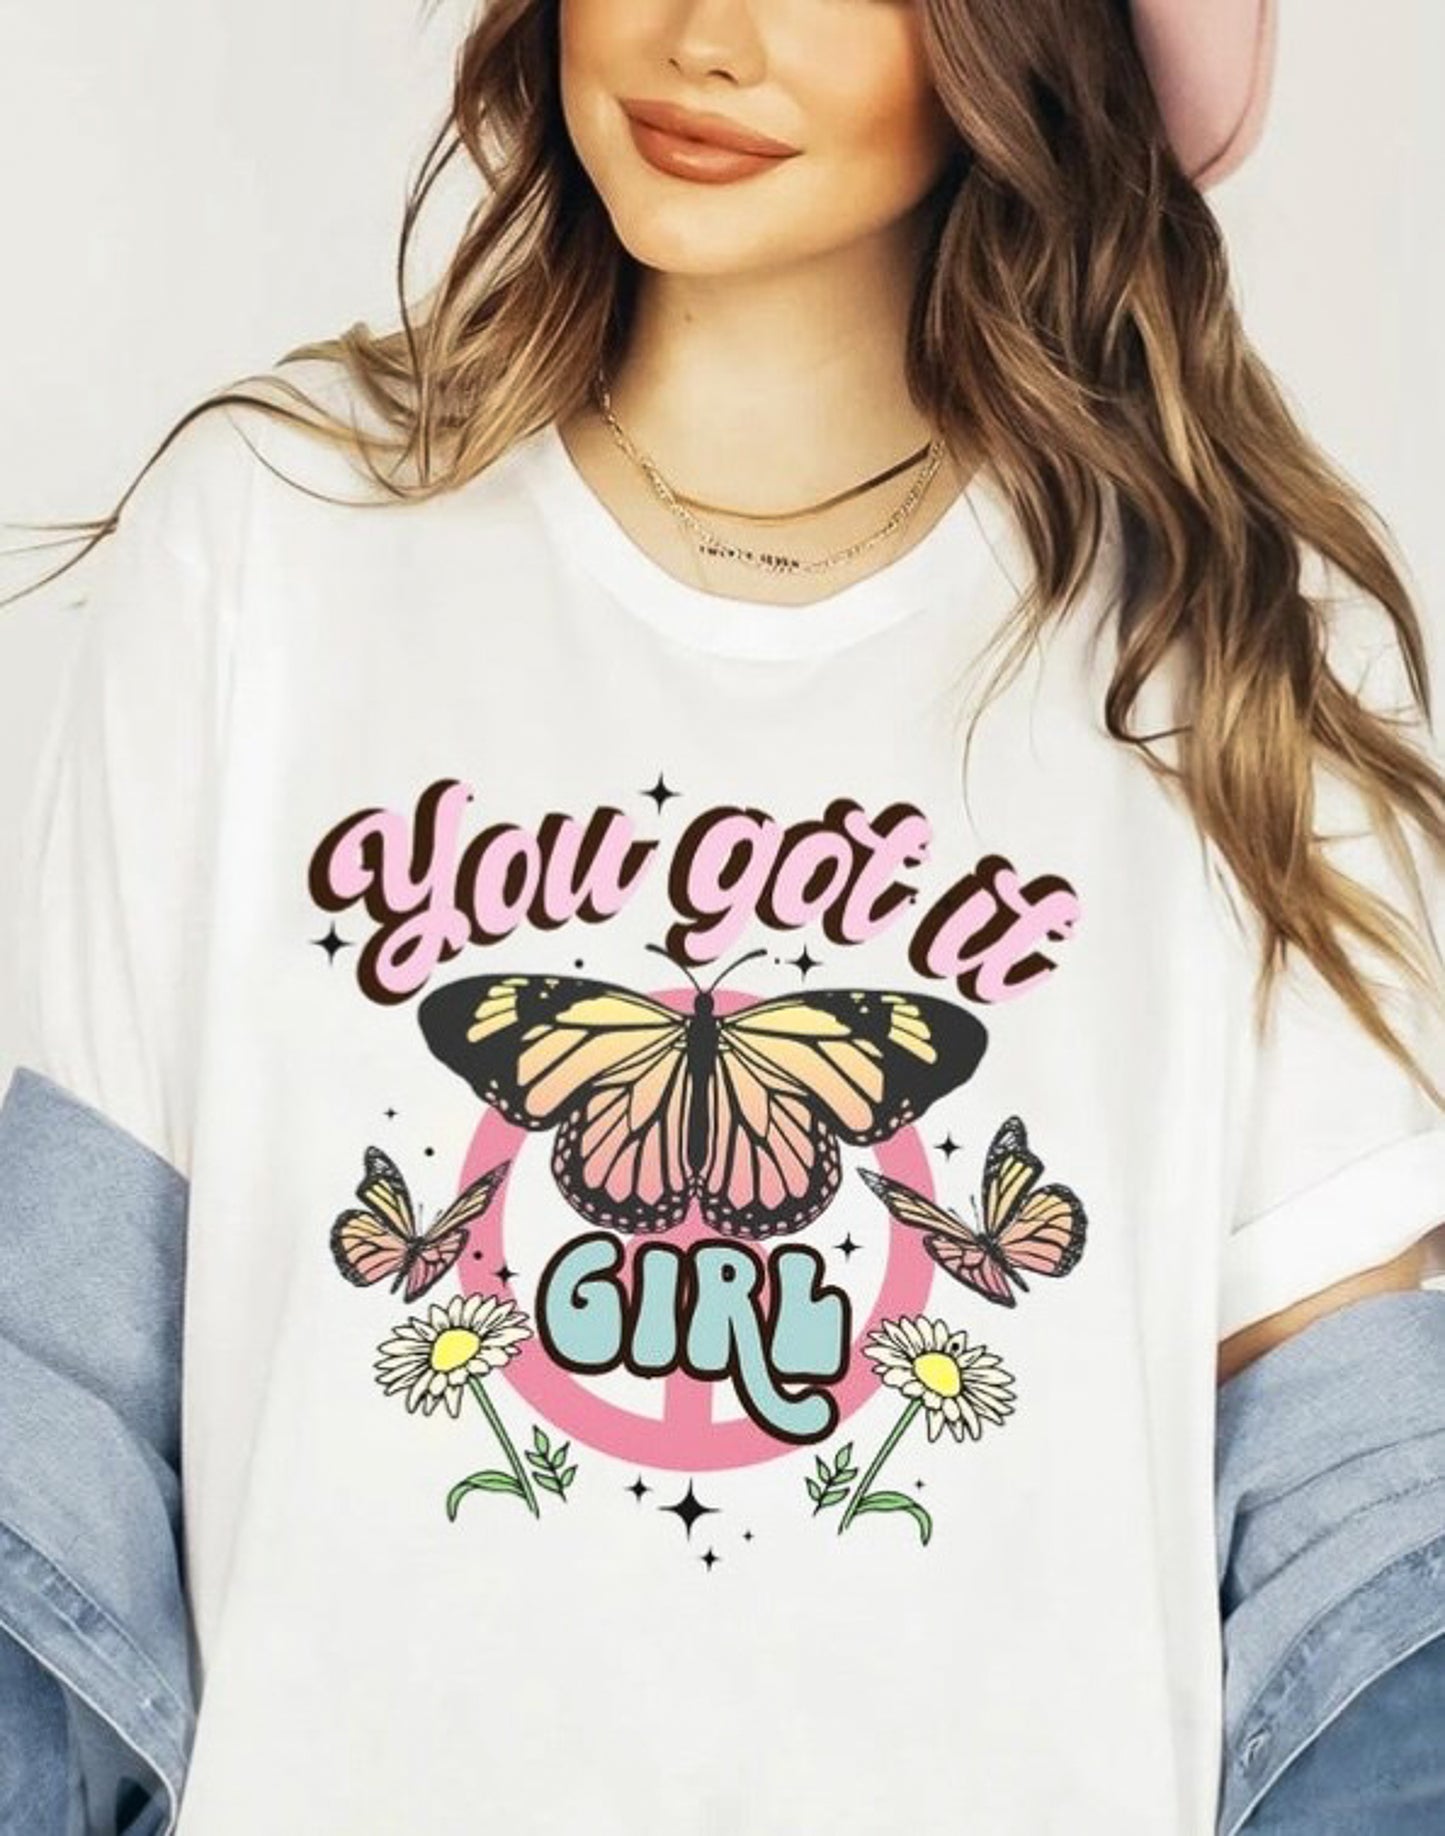 You Got It Girl Butterfly Tee